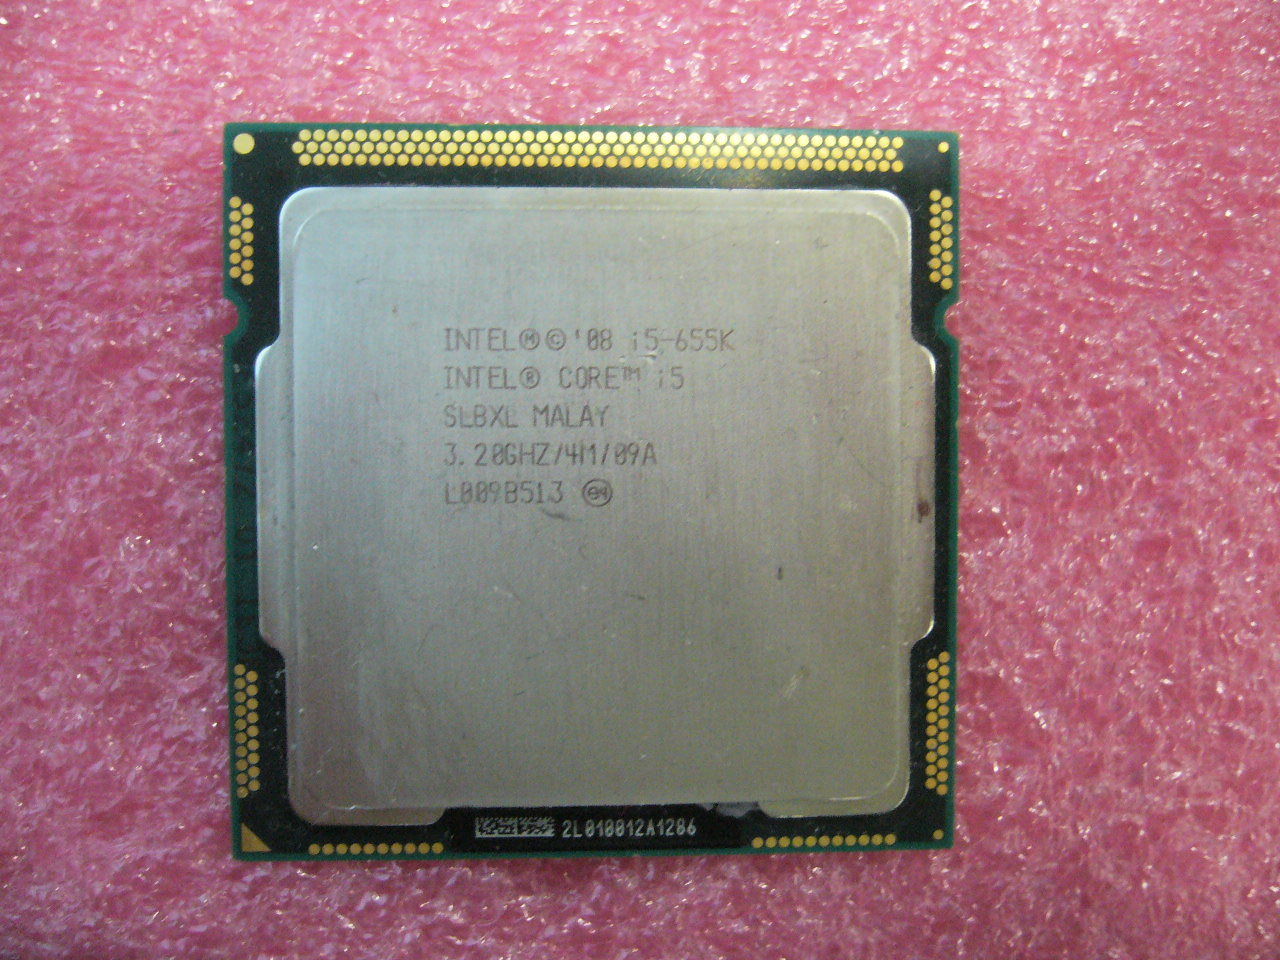 QTY 1x INTEL Core i5 Dual Core CPU i5-655K 3.20GHZ/4MB LGA1156 SLBXL - Click Image to Close